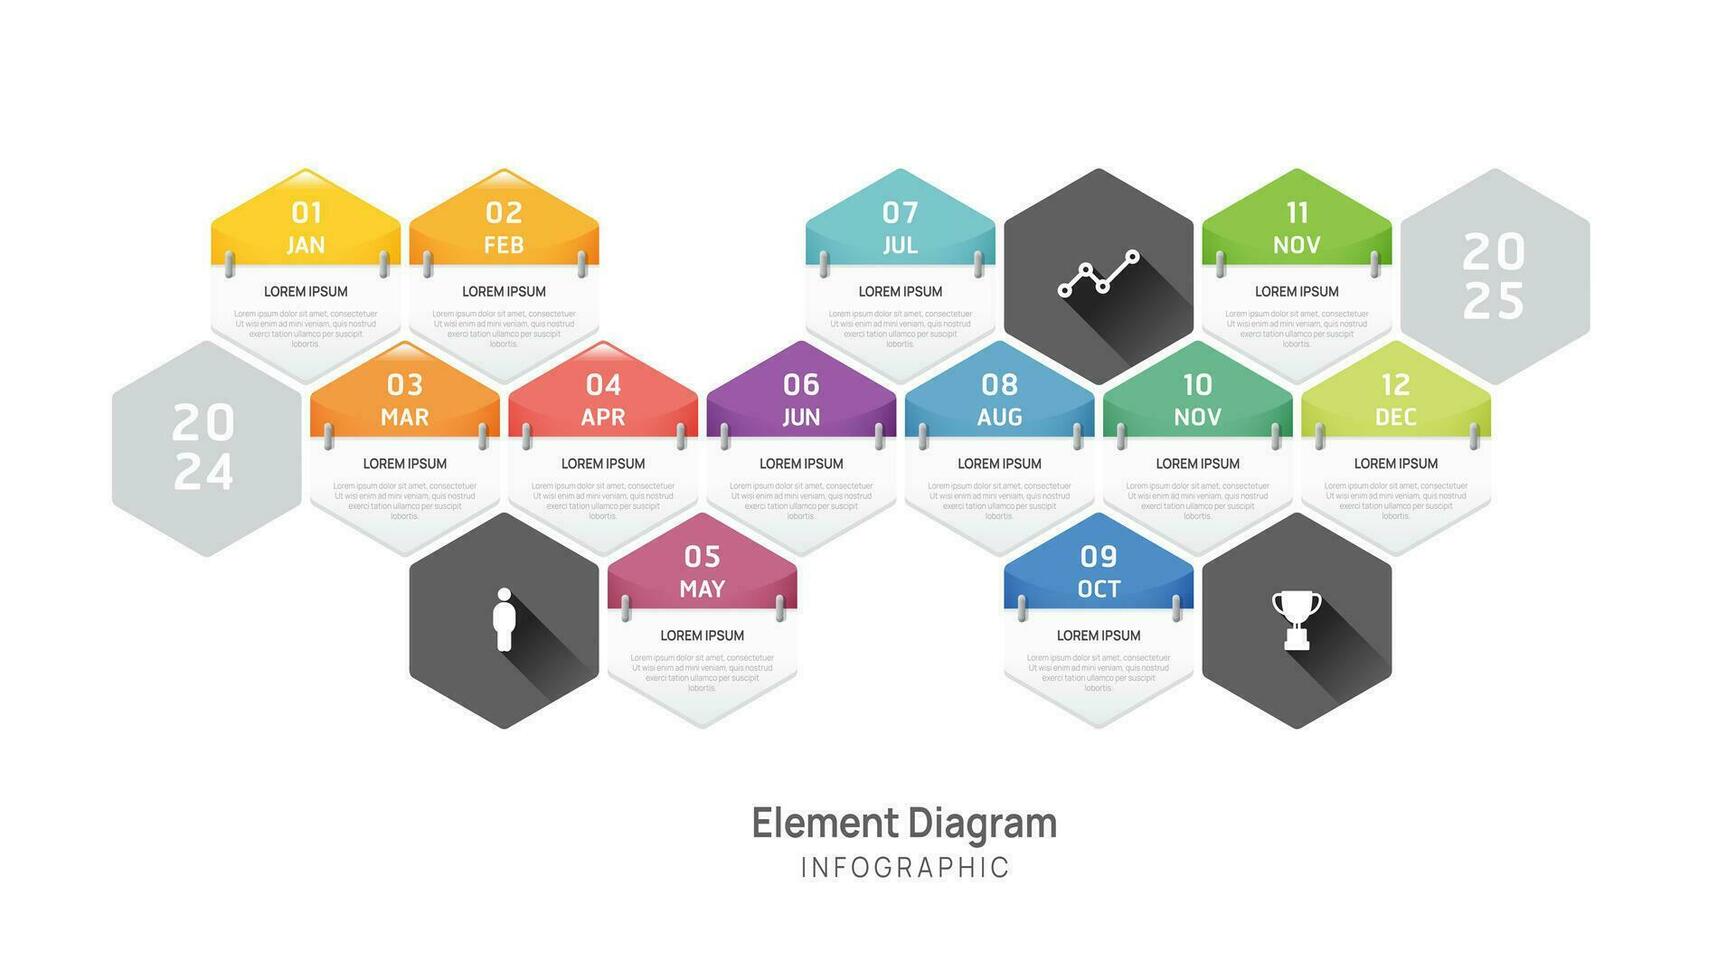 Agenda Infographic template for business. 12 Months Timeline element diagram calendar, 4 quarter milestone vector infographic.